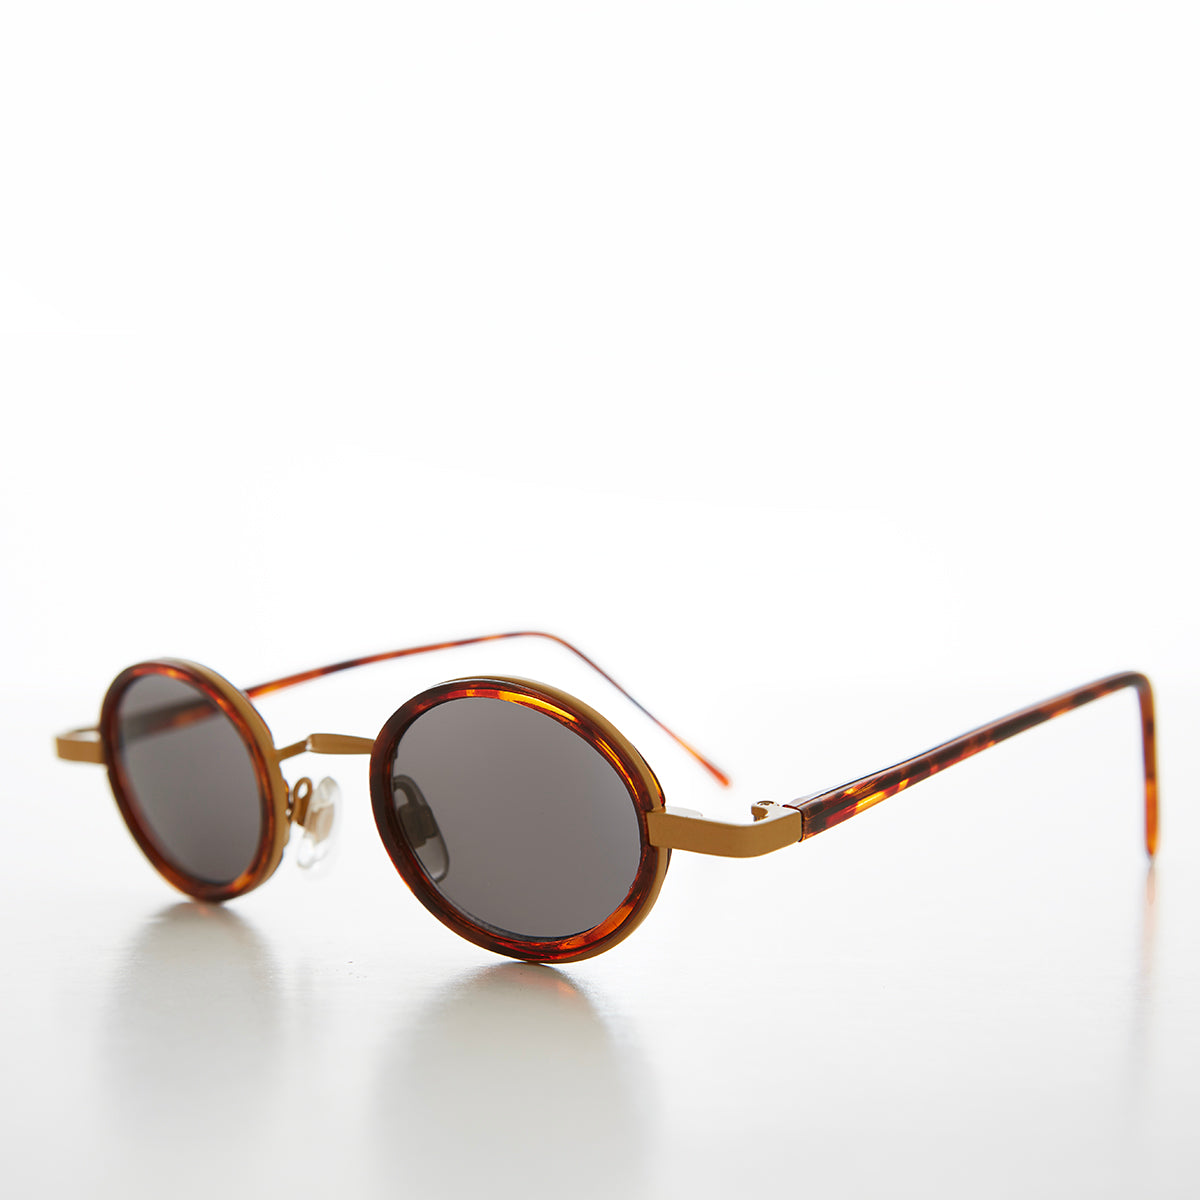 Tiny Oval Indie Futuristic Sunglasses - Weldon